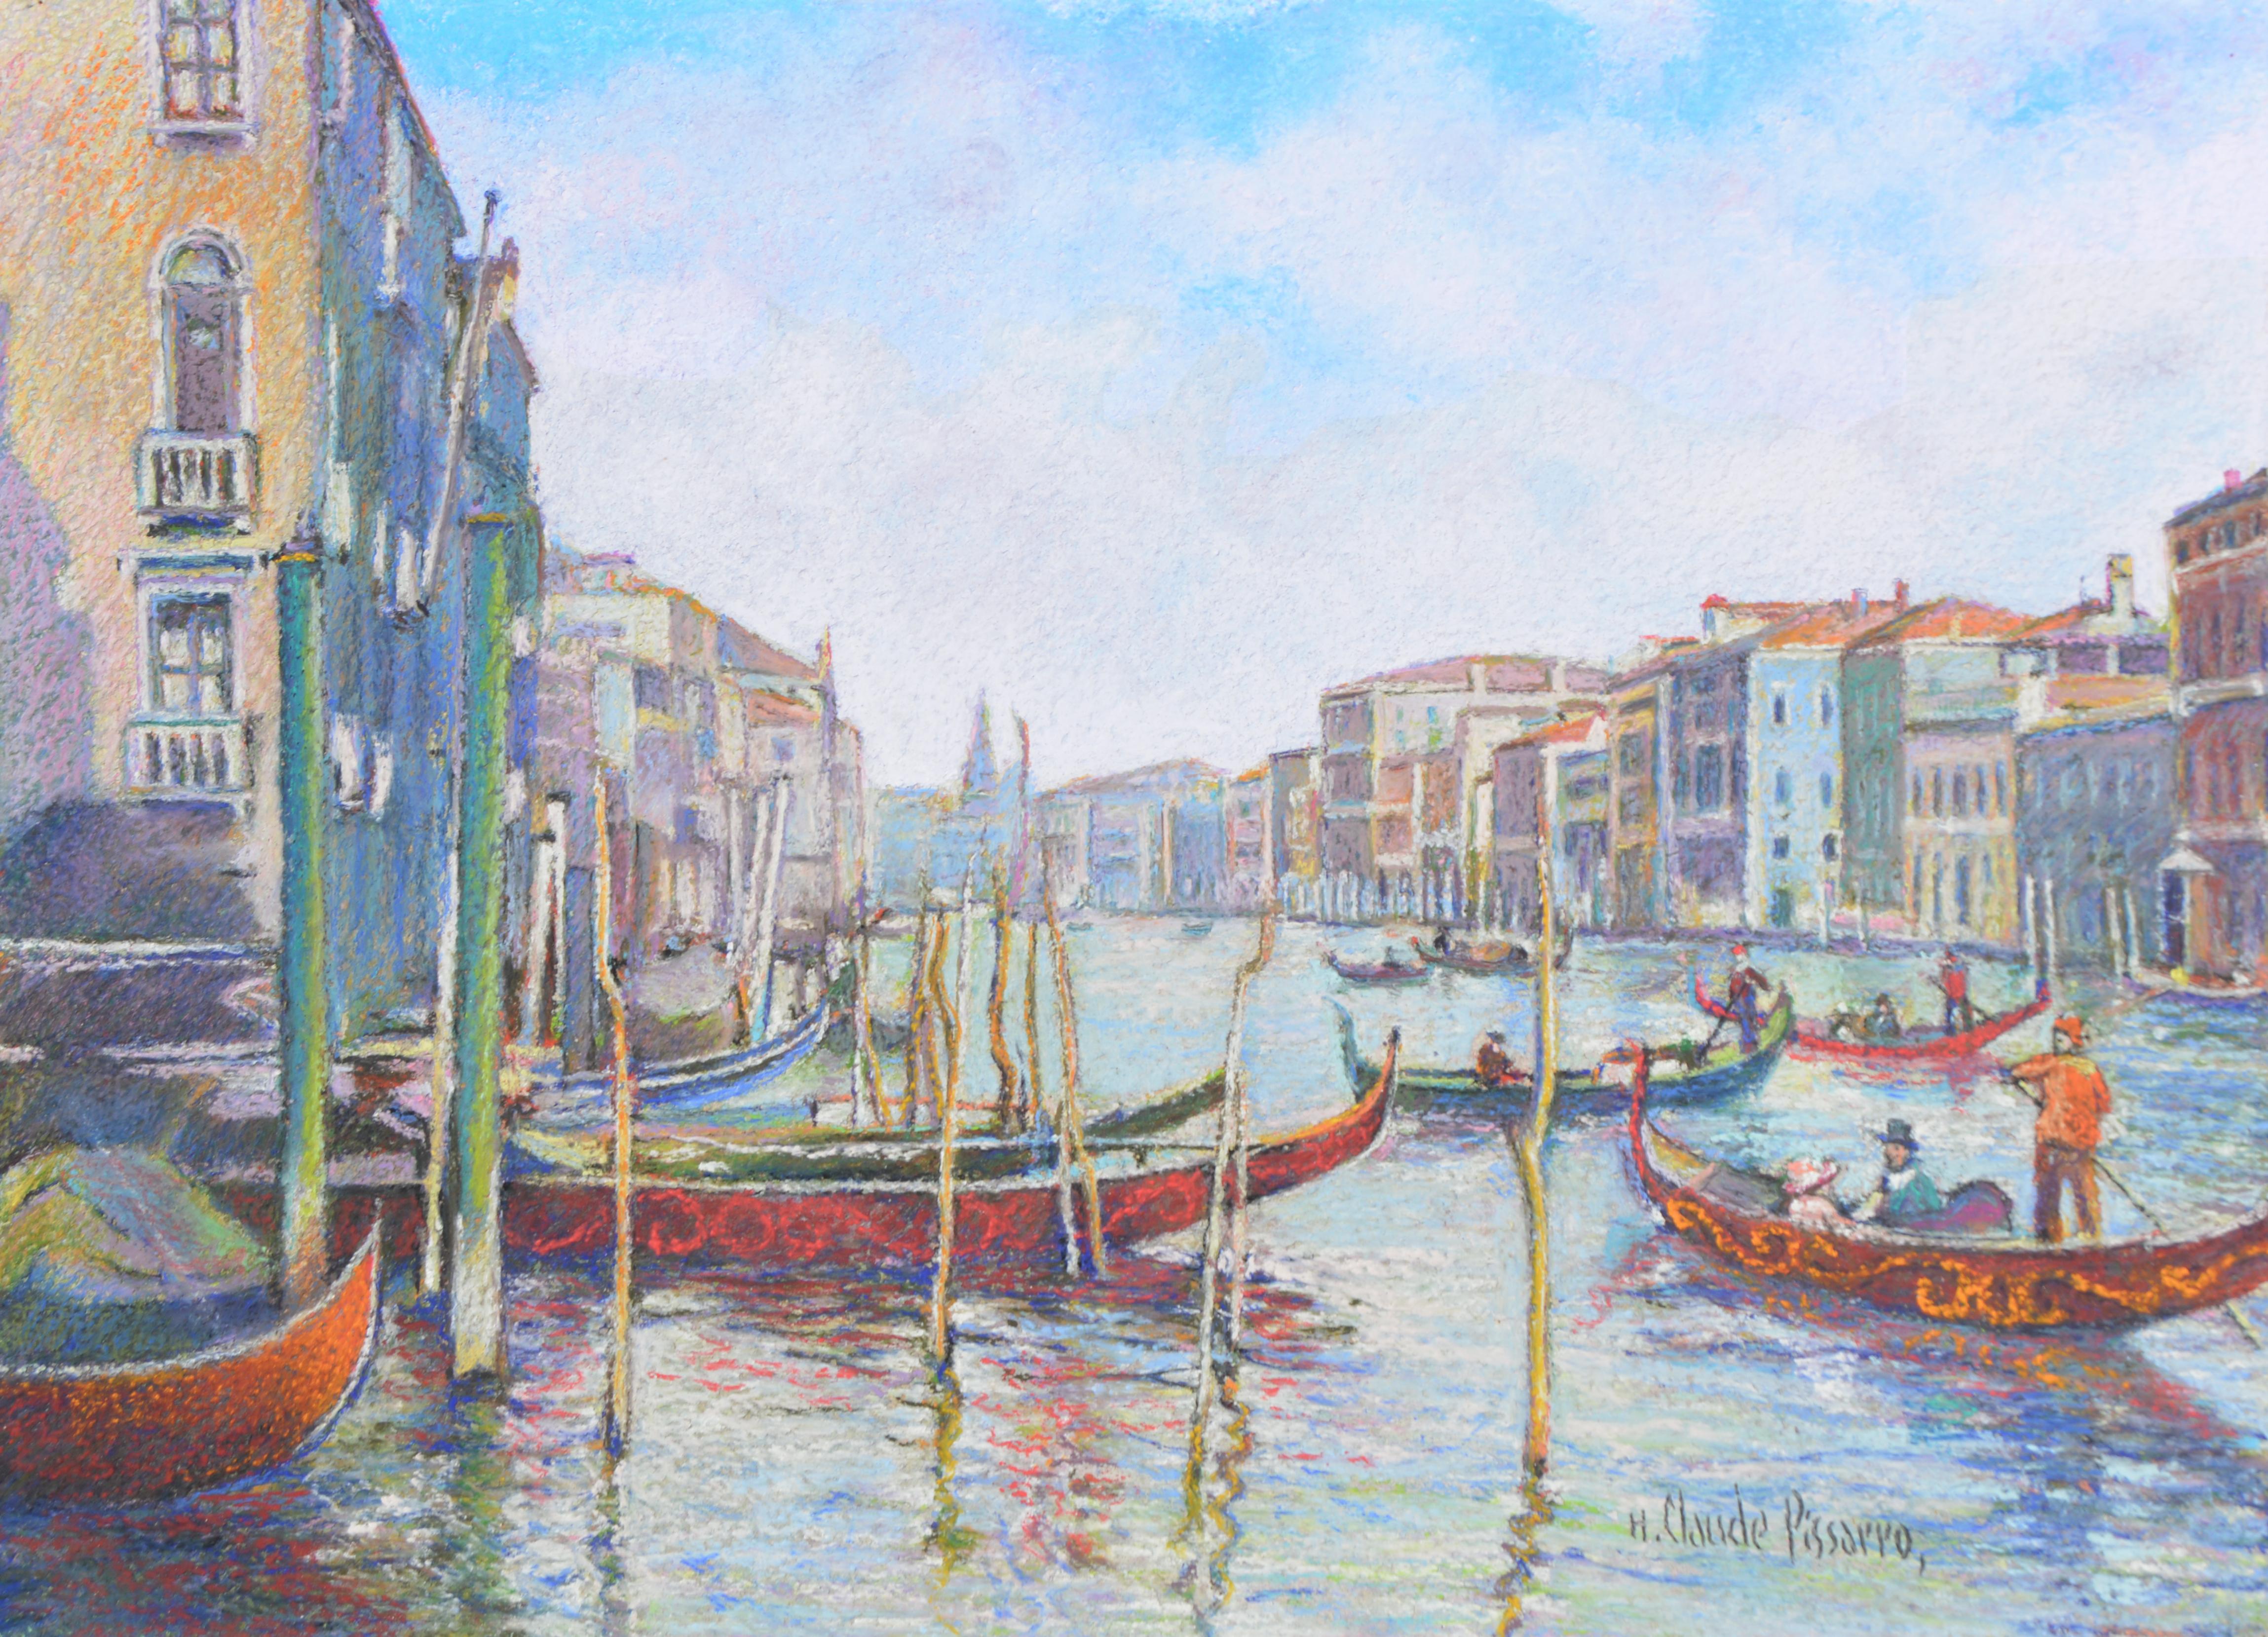 Hughes Claude Pissarro Landscape Art - French Impressionist Landscape of Venice by H.C. Pissarro, titled Maison Foscari